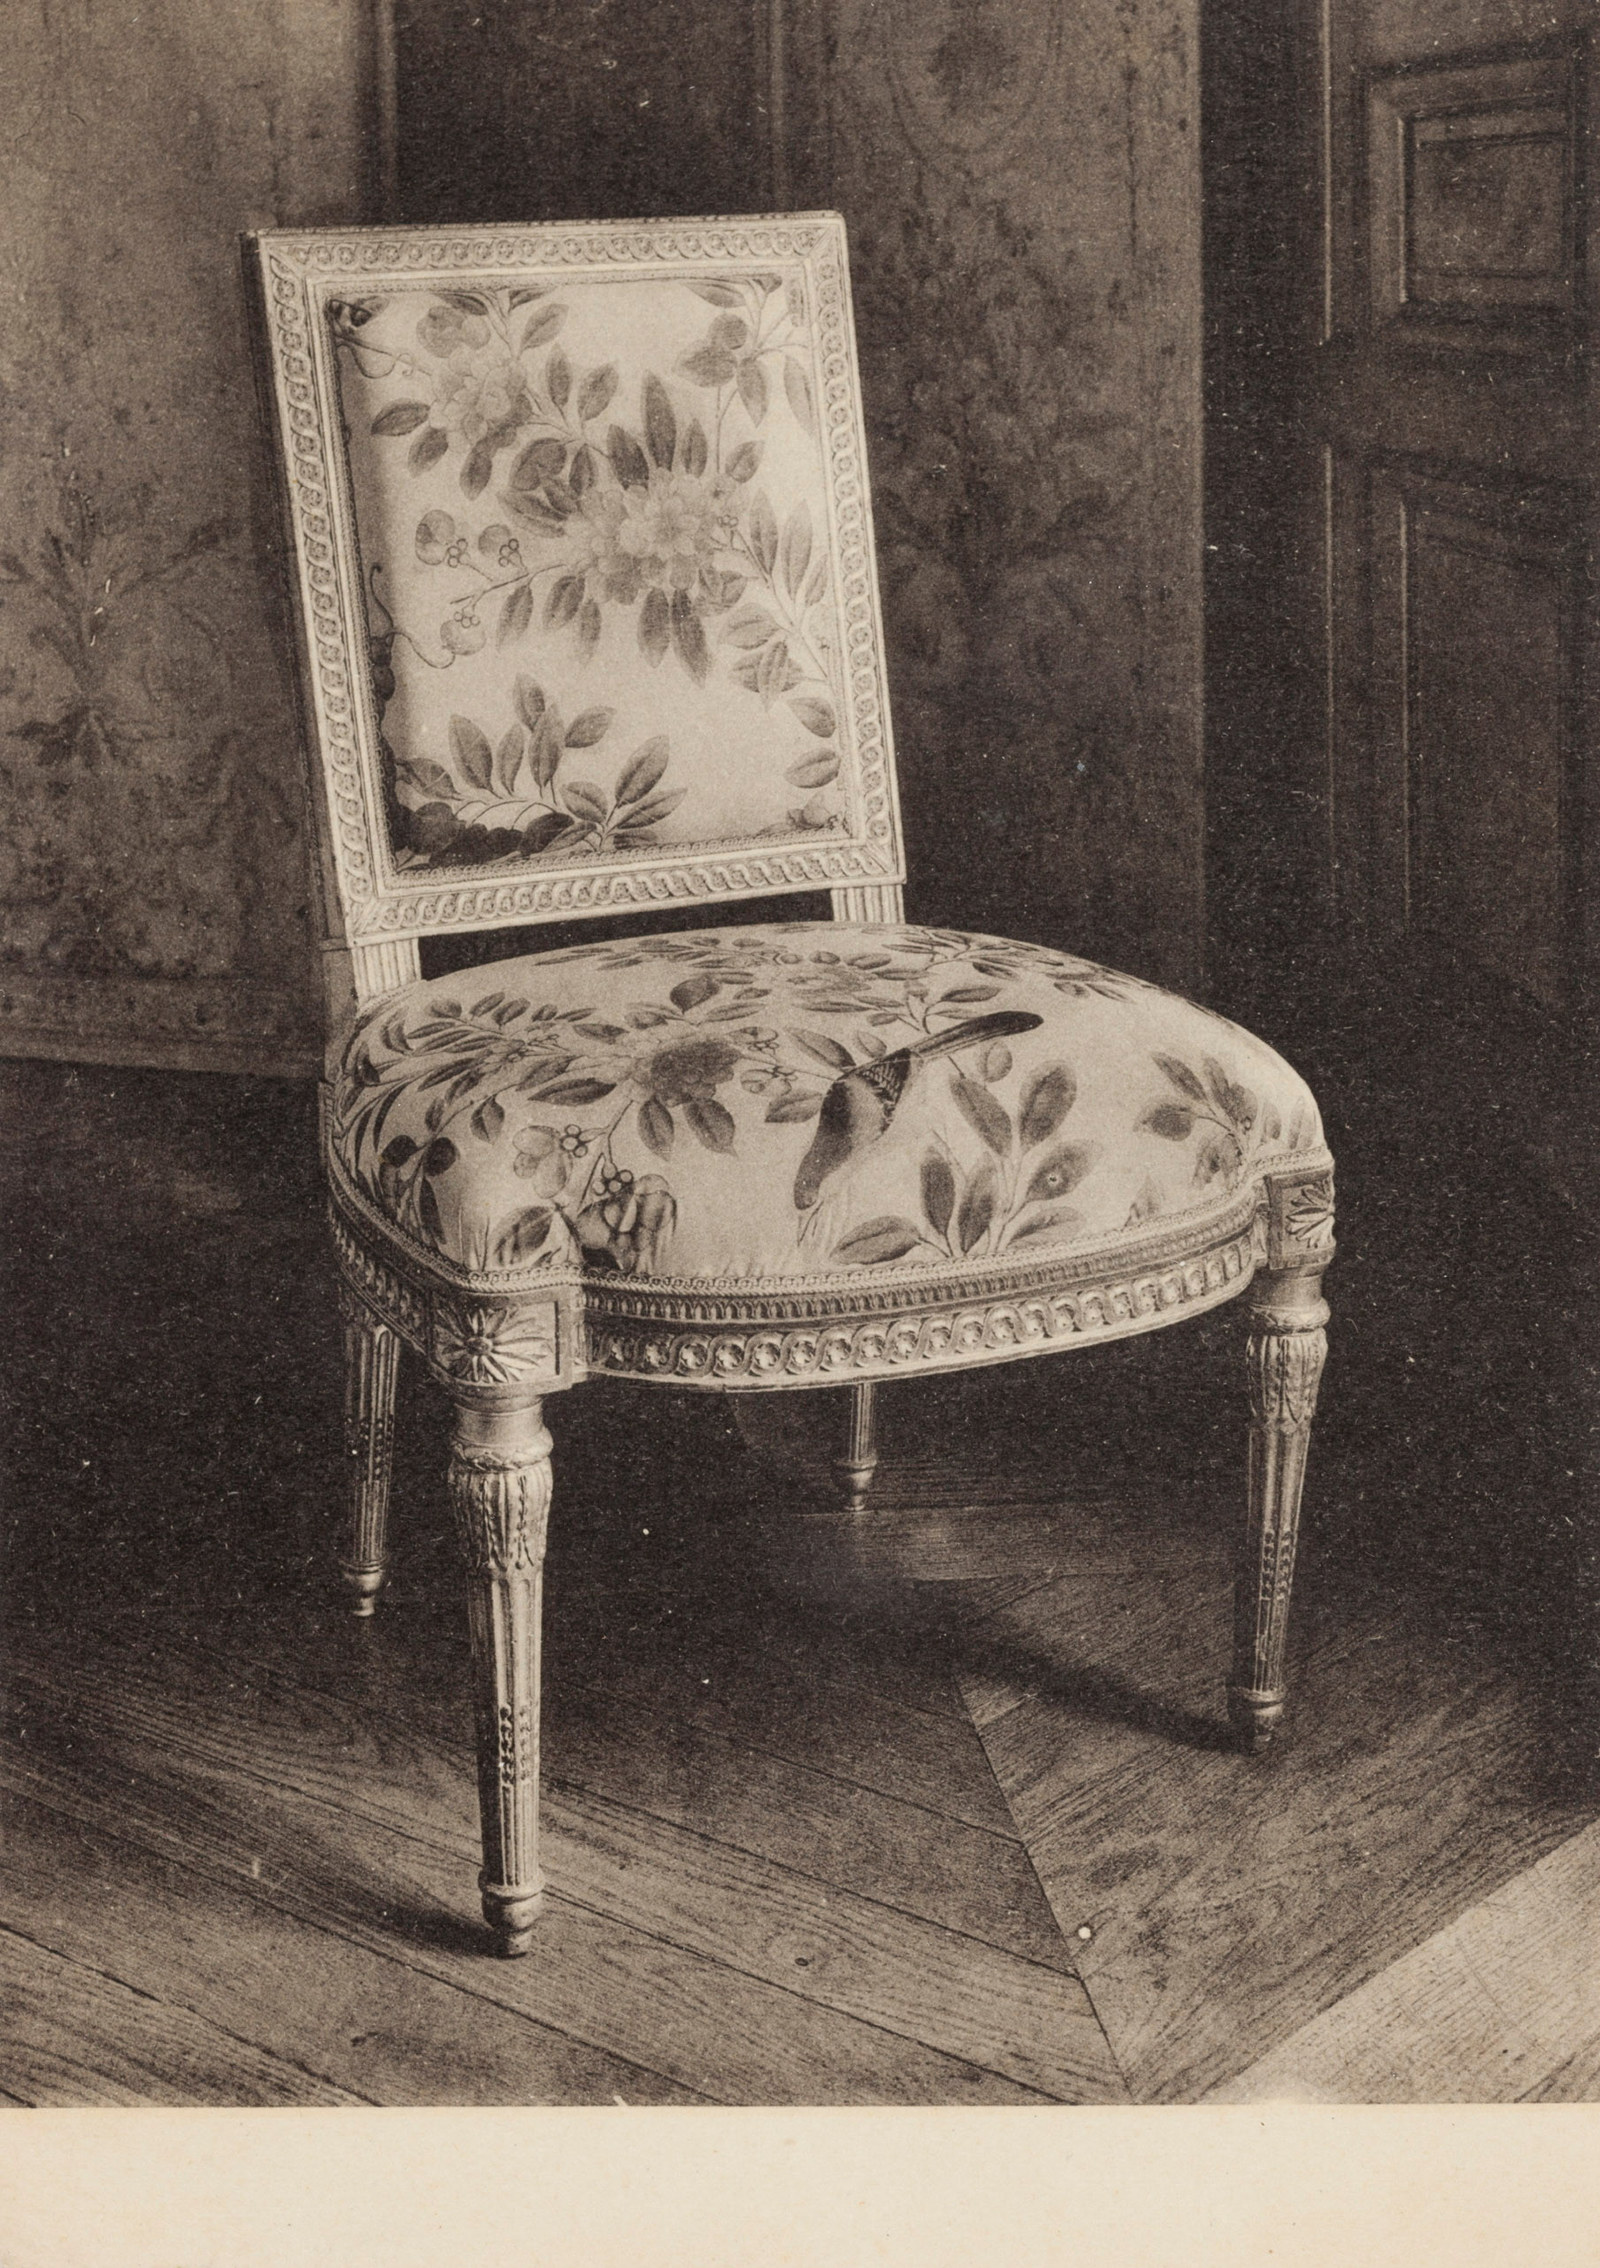 Postcard of a 'Chaise en bois sculpte' dated to 1791